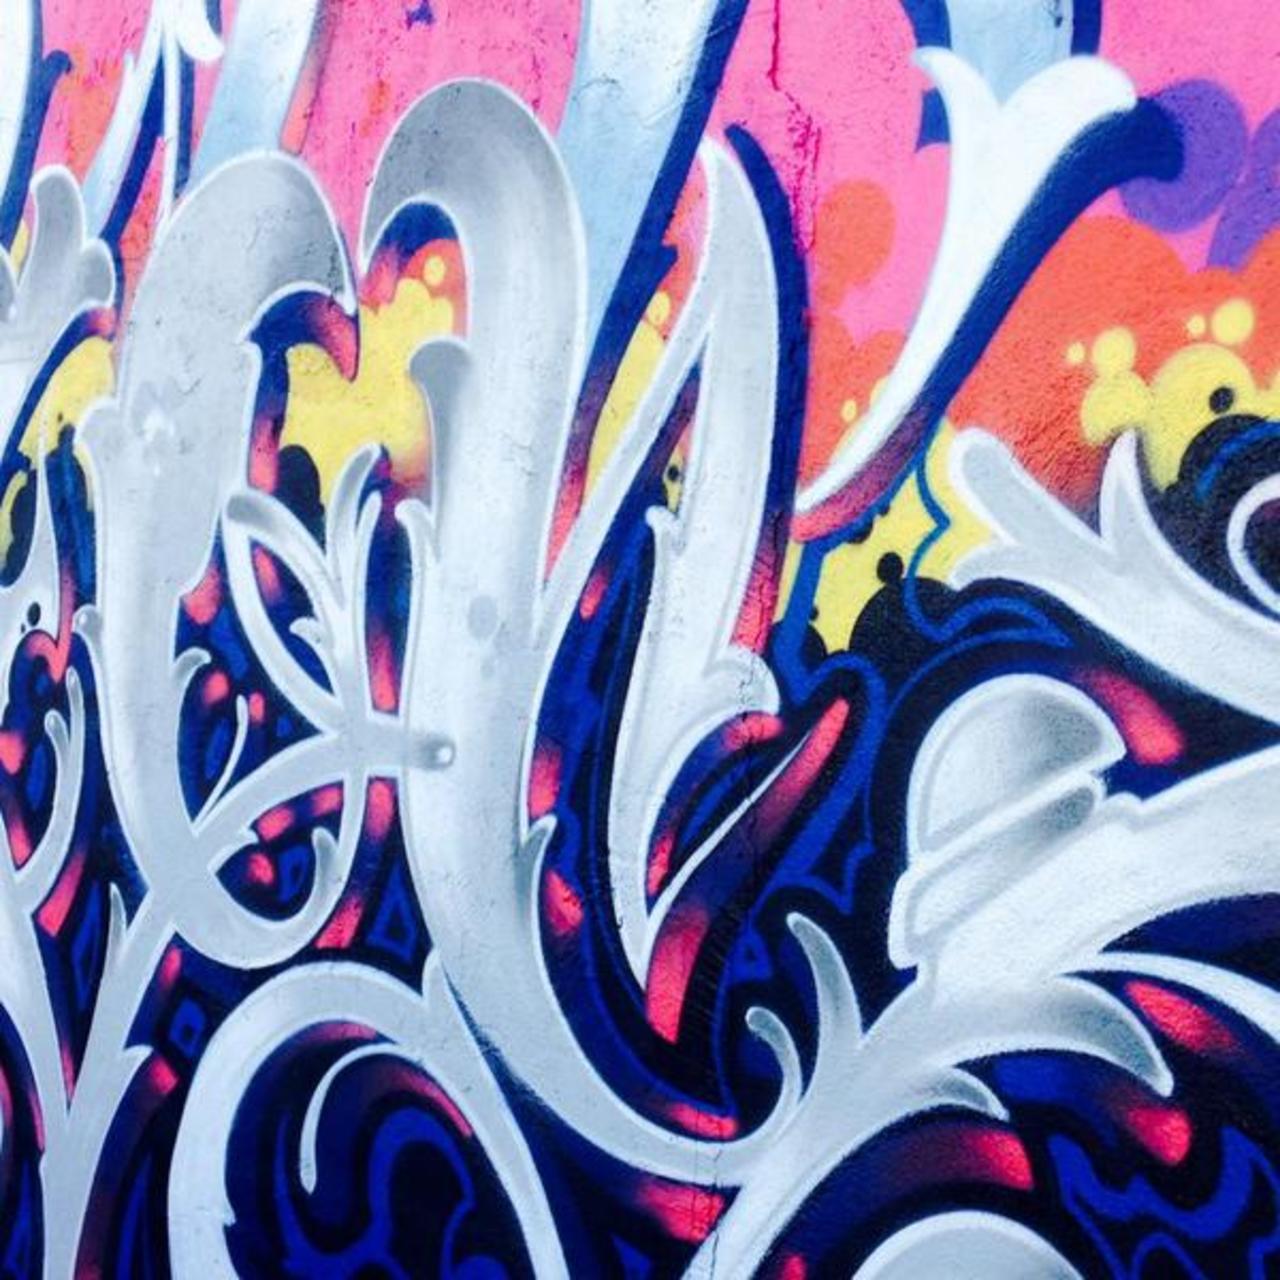 hutterdesign: Street Art at #Navigli!....#streetart #milan #milano #graffiti #italy #urban #colores http://t.co/ShEYrSaWhy